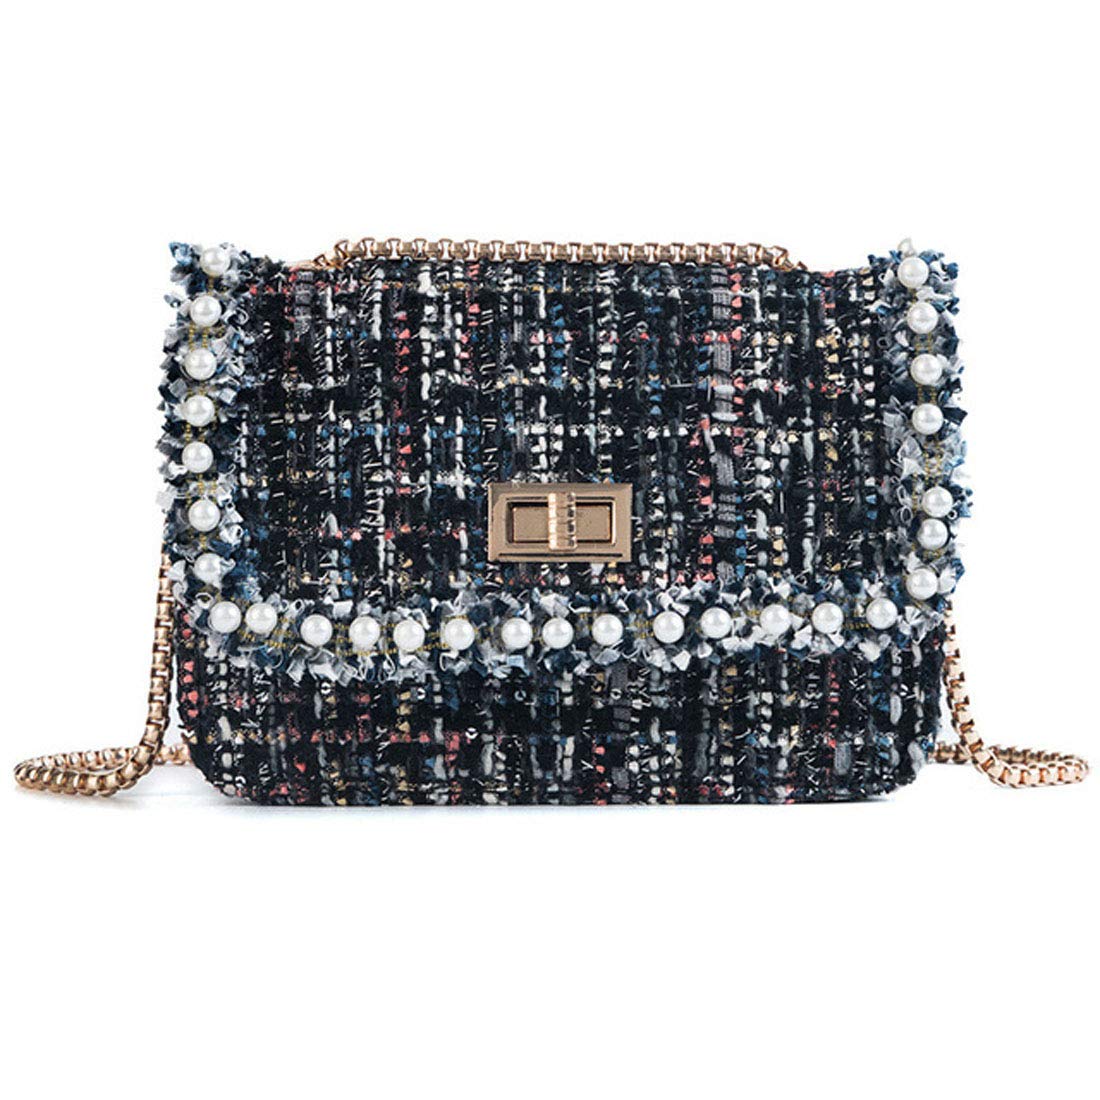 Globalwells Chain Handbags with pearl For Women Shoulder Bag Woolen Fabric Messenger Bag Clutch Evening Bag